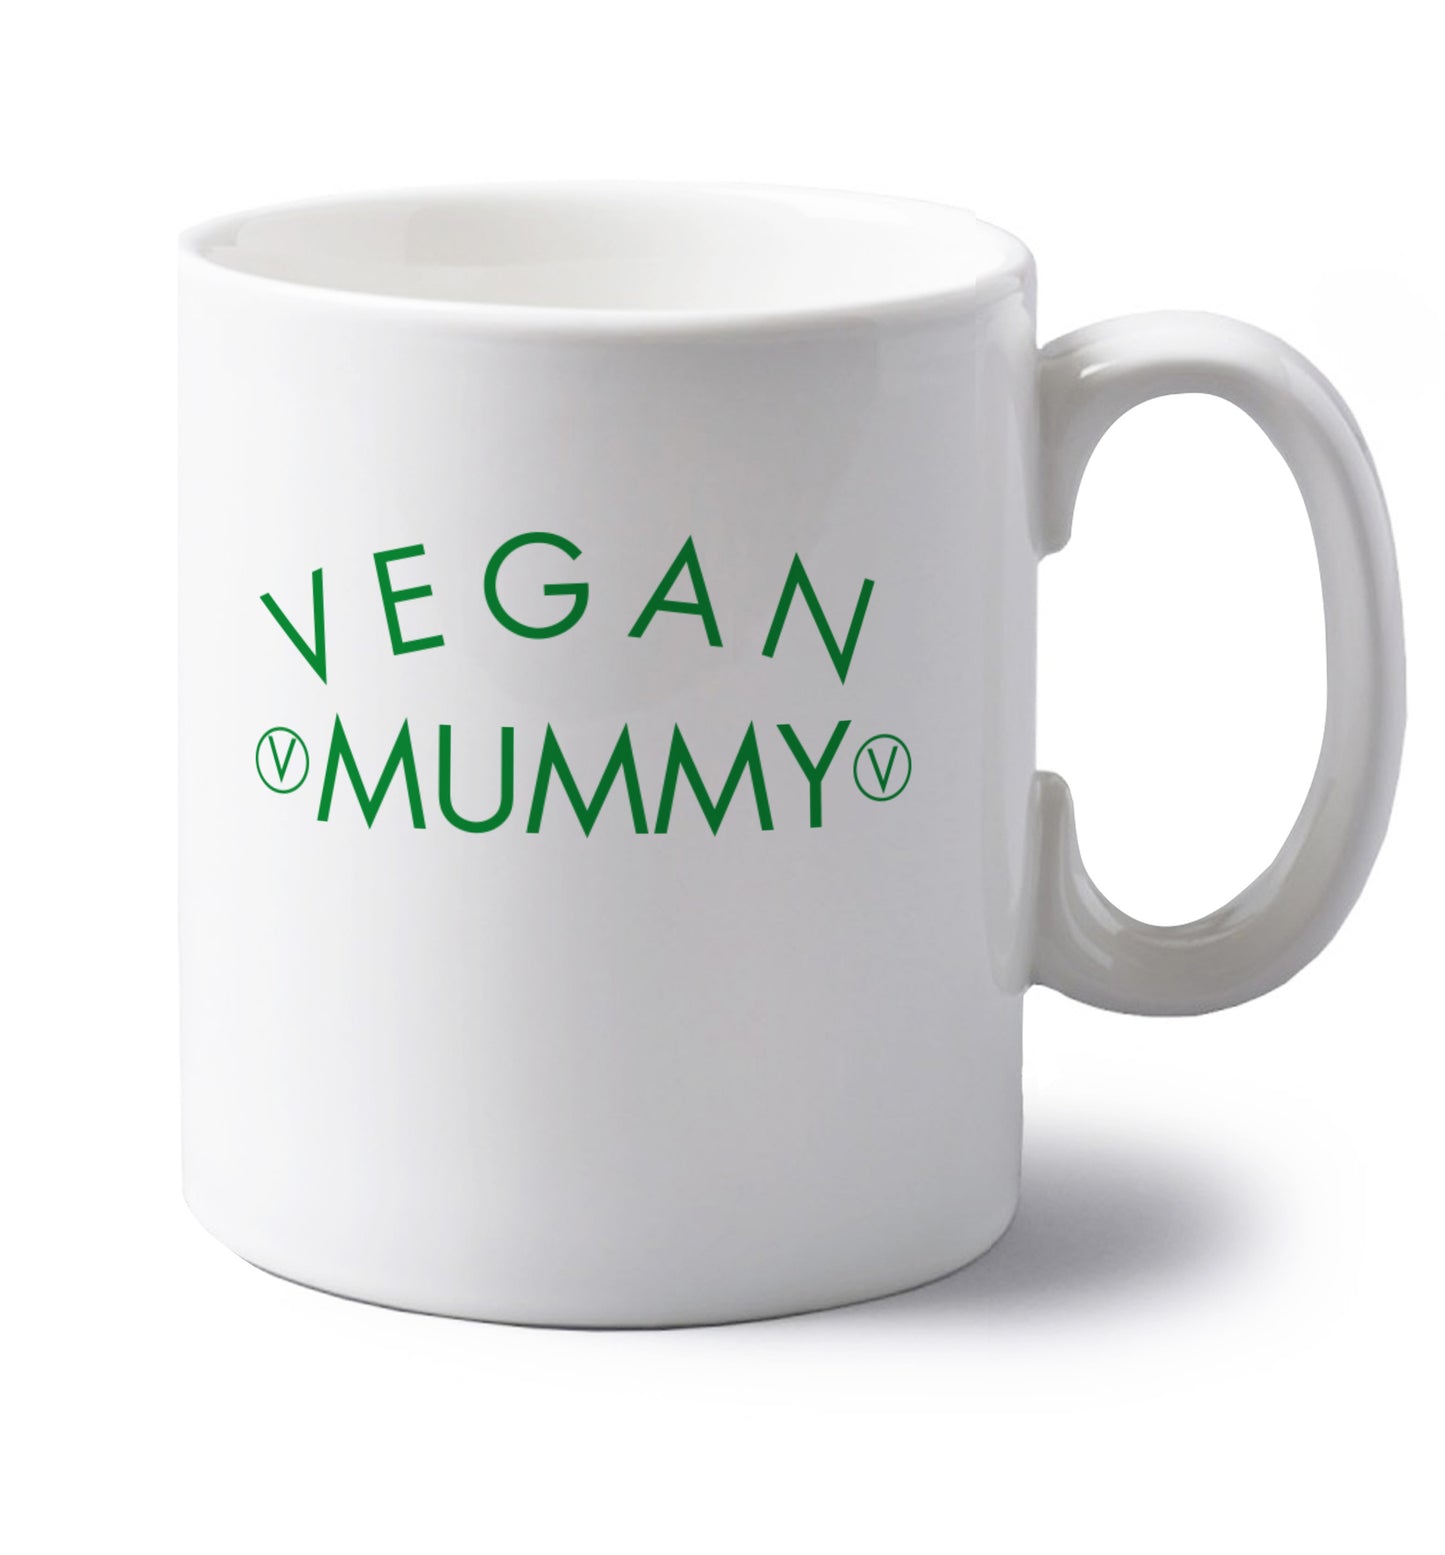 Vegan mummy left handed white ceramic mug 